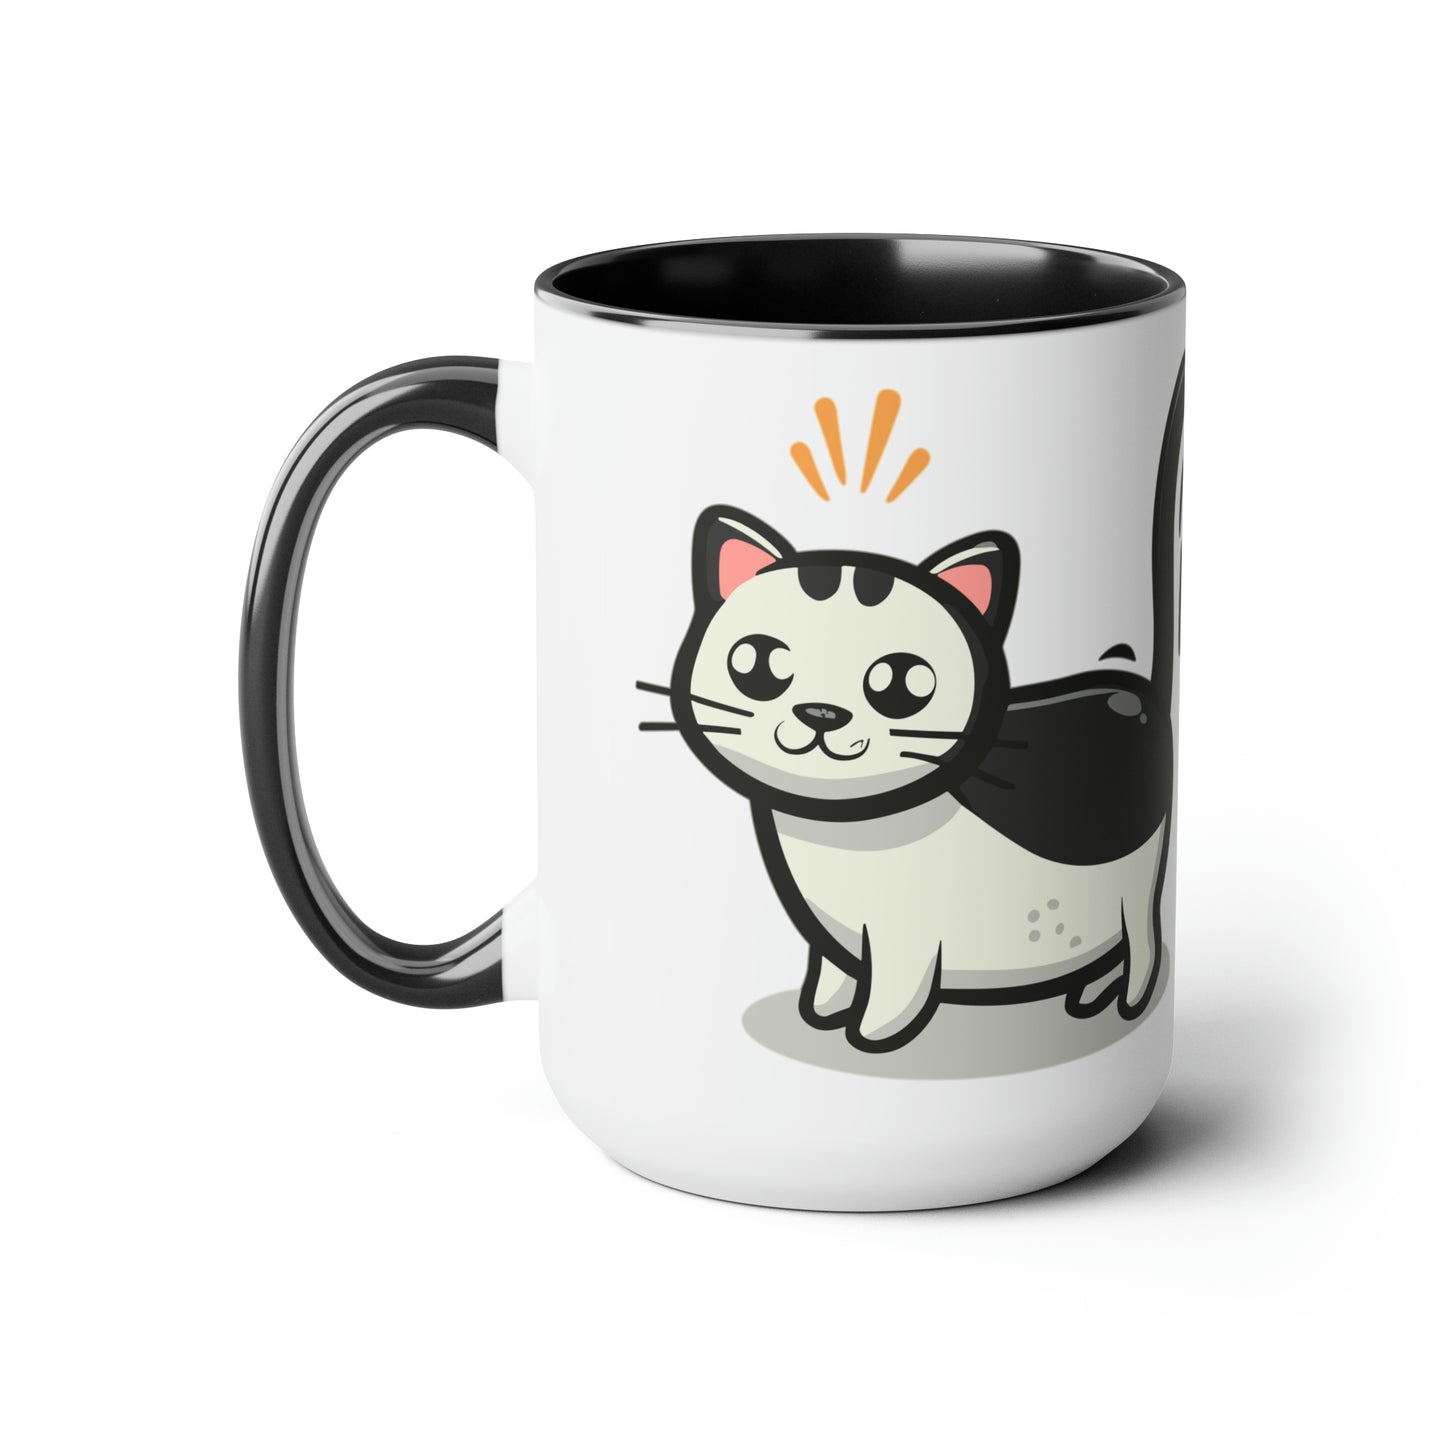 Cordial Kitty, May I Poop Here 15oz Coffee Mug